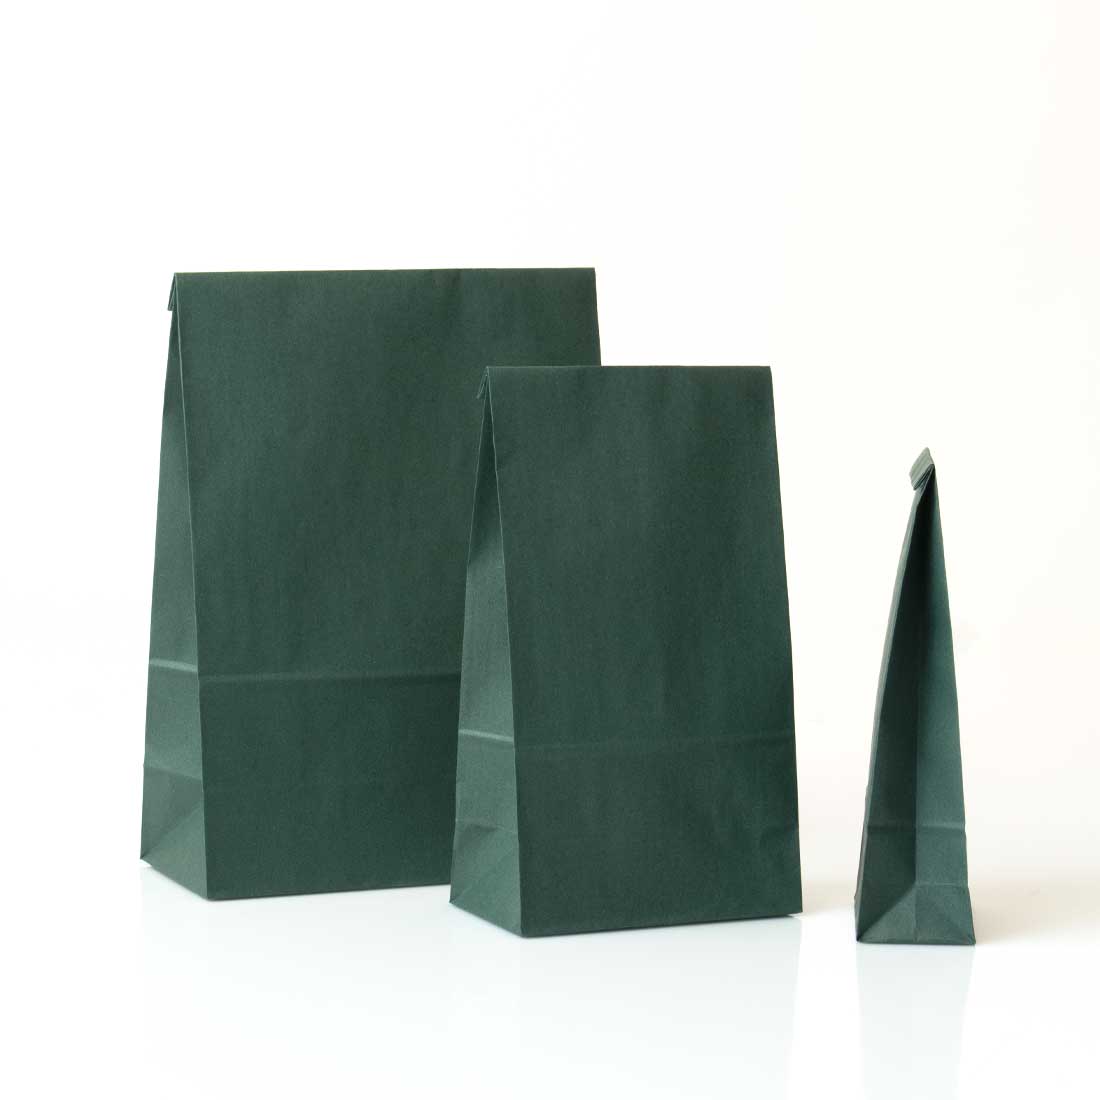 Hunter Green Gift Tissue Paper, 480 Unfolded Sheets 20 x 30